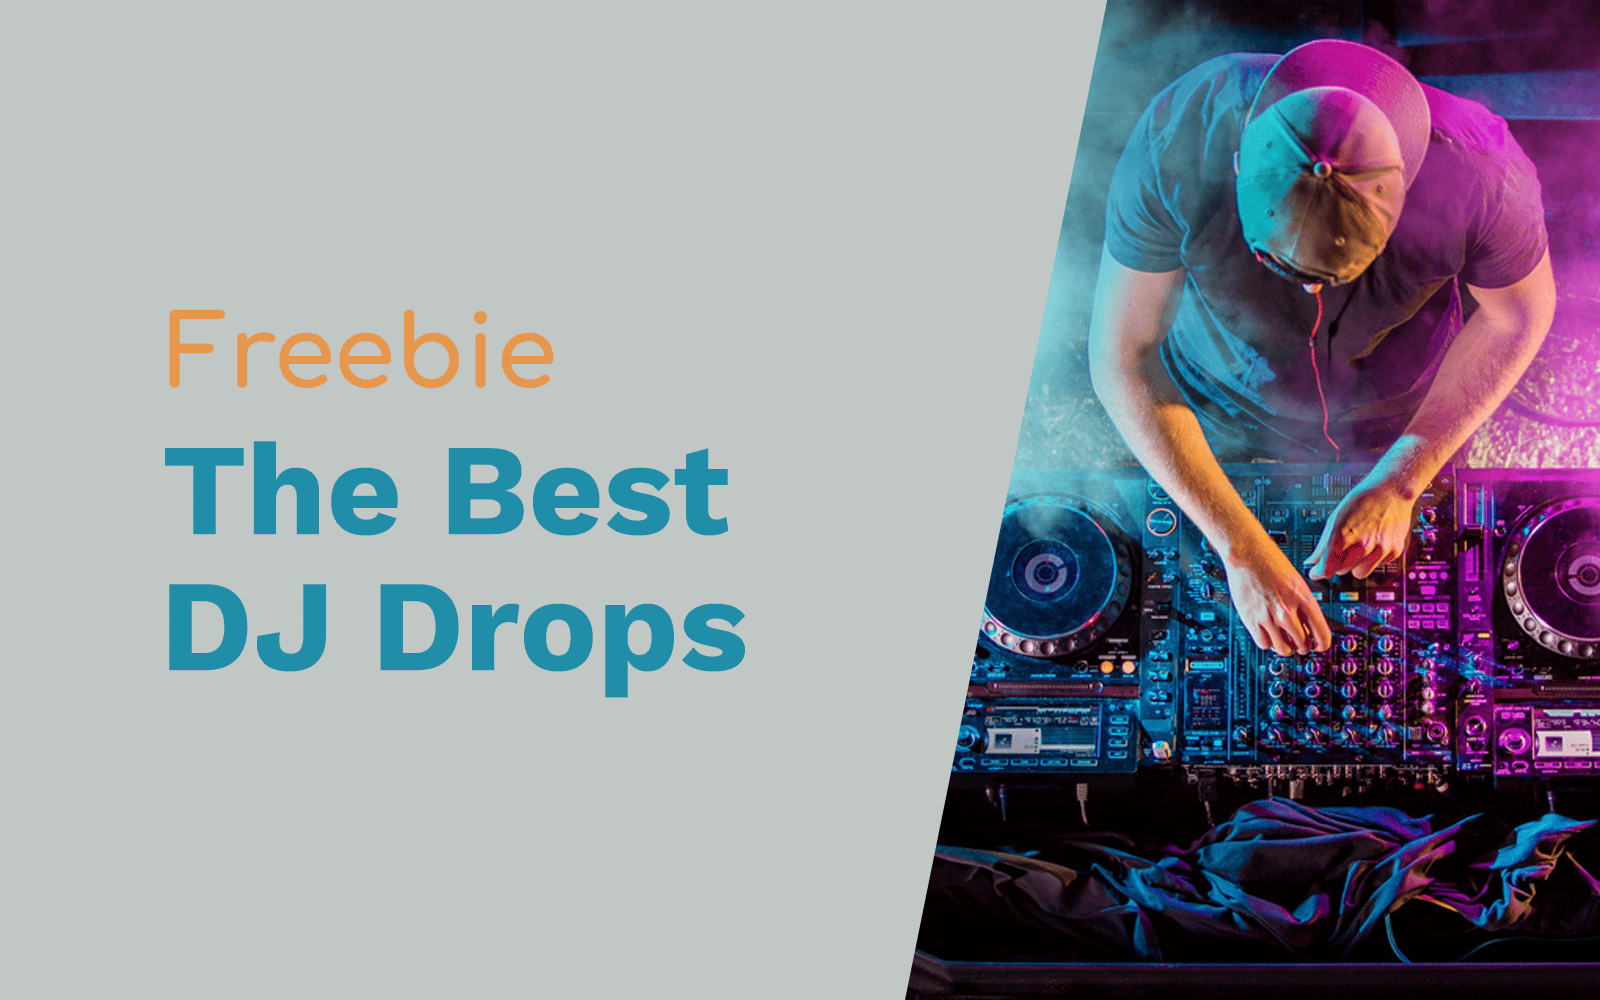 DJ Drops 24/7 - Celebrity Drop #1